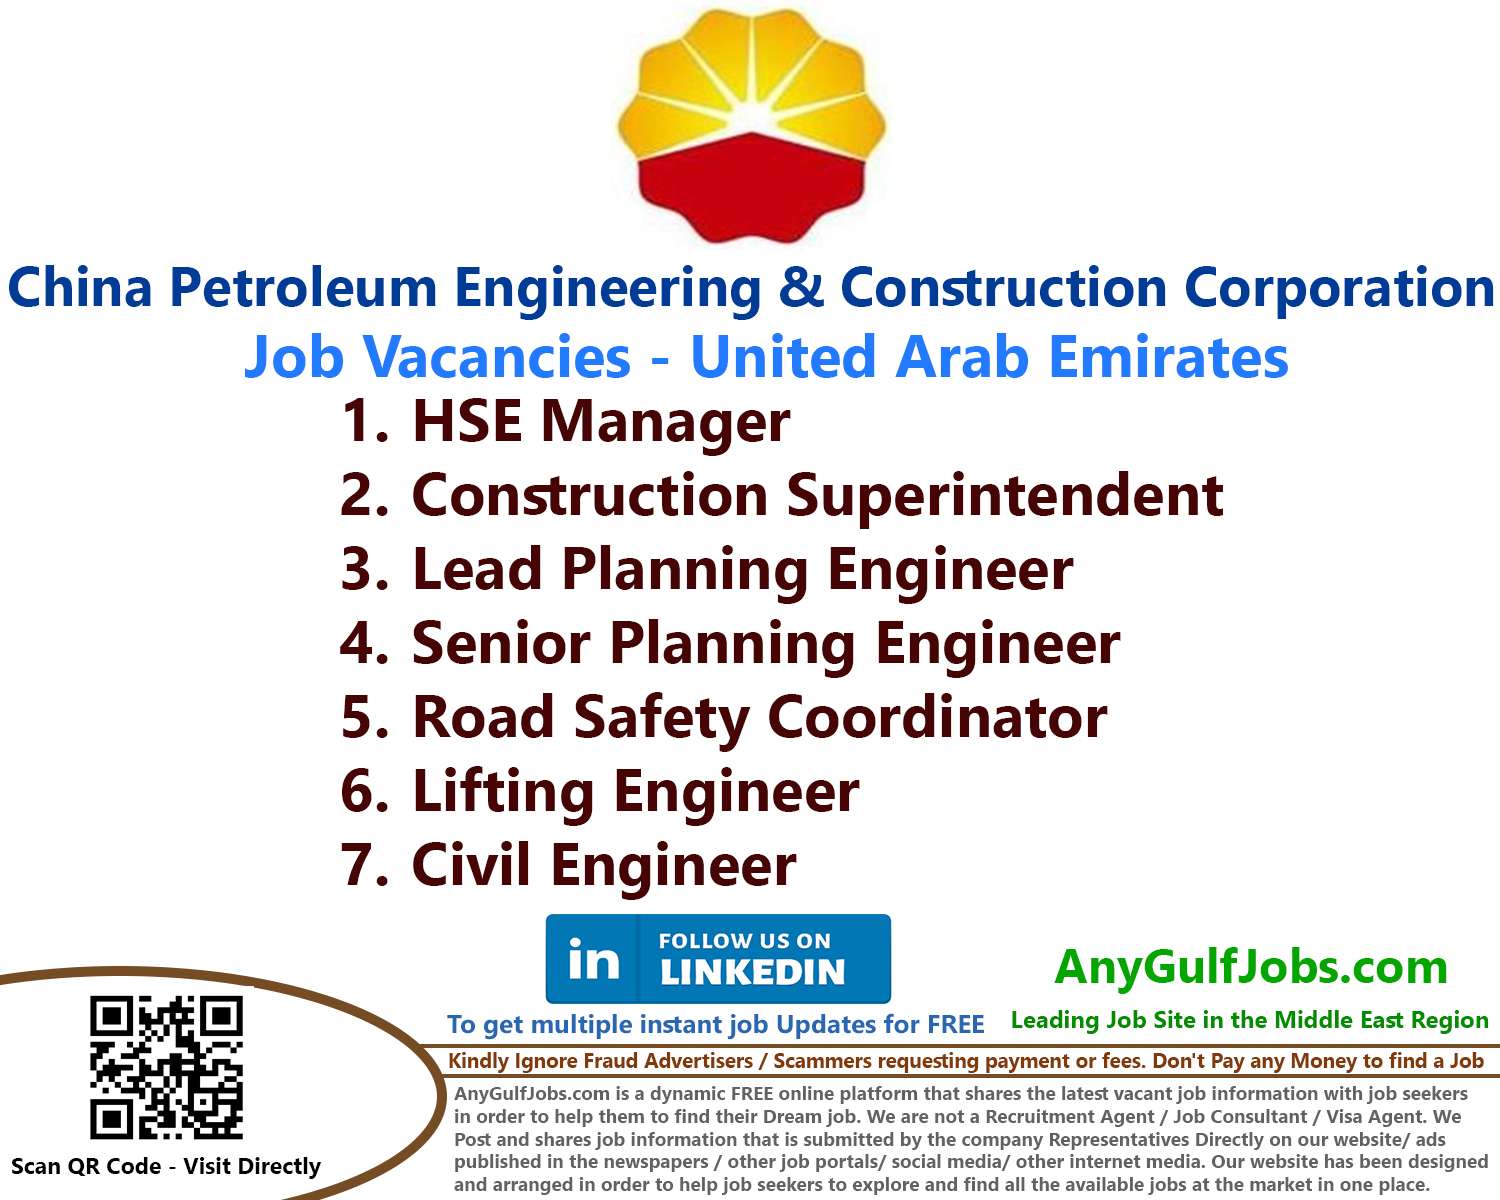 List of China Petroleum Engineering & Construction Corporation (CPECC) Jobs - United Arab Emirates